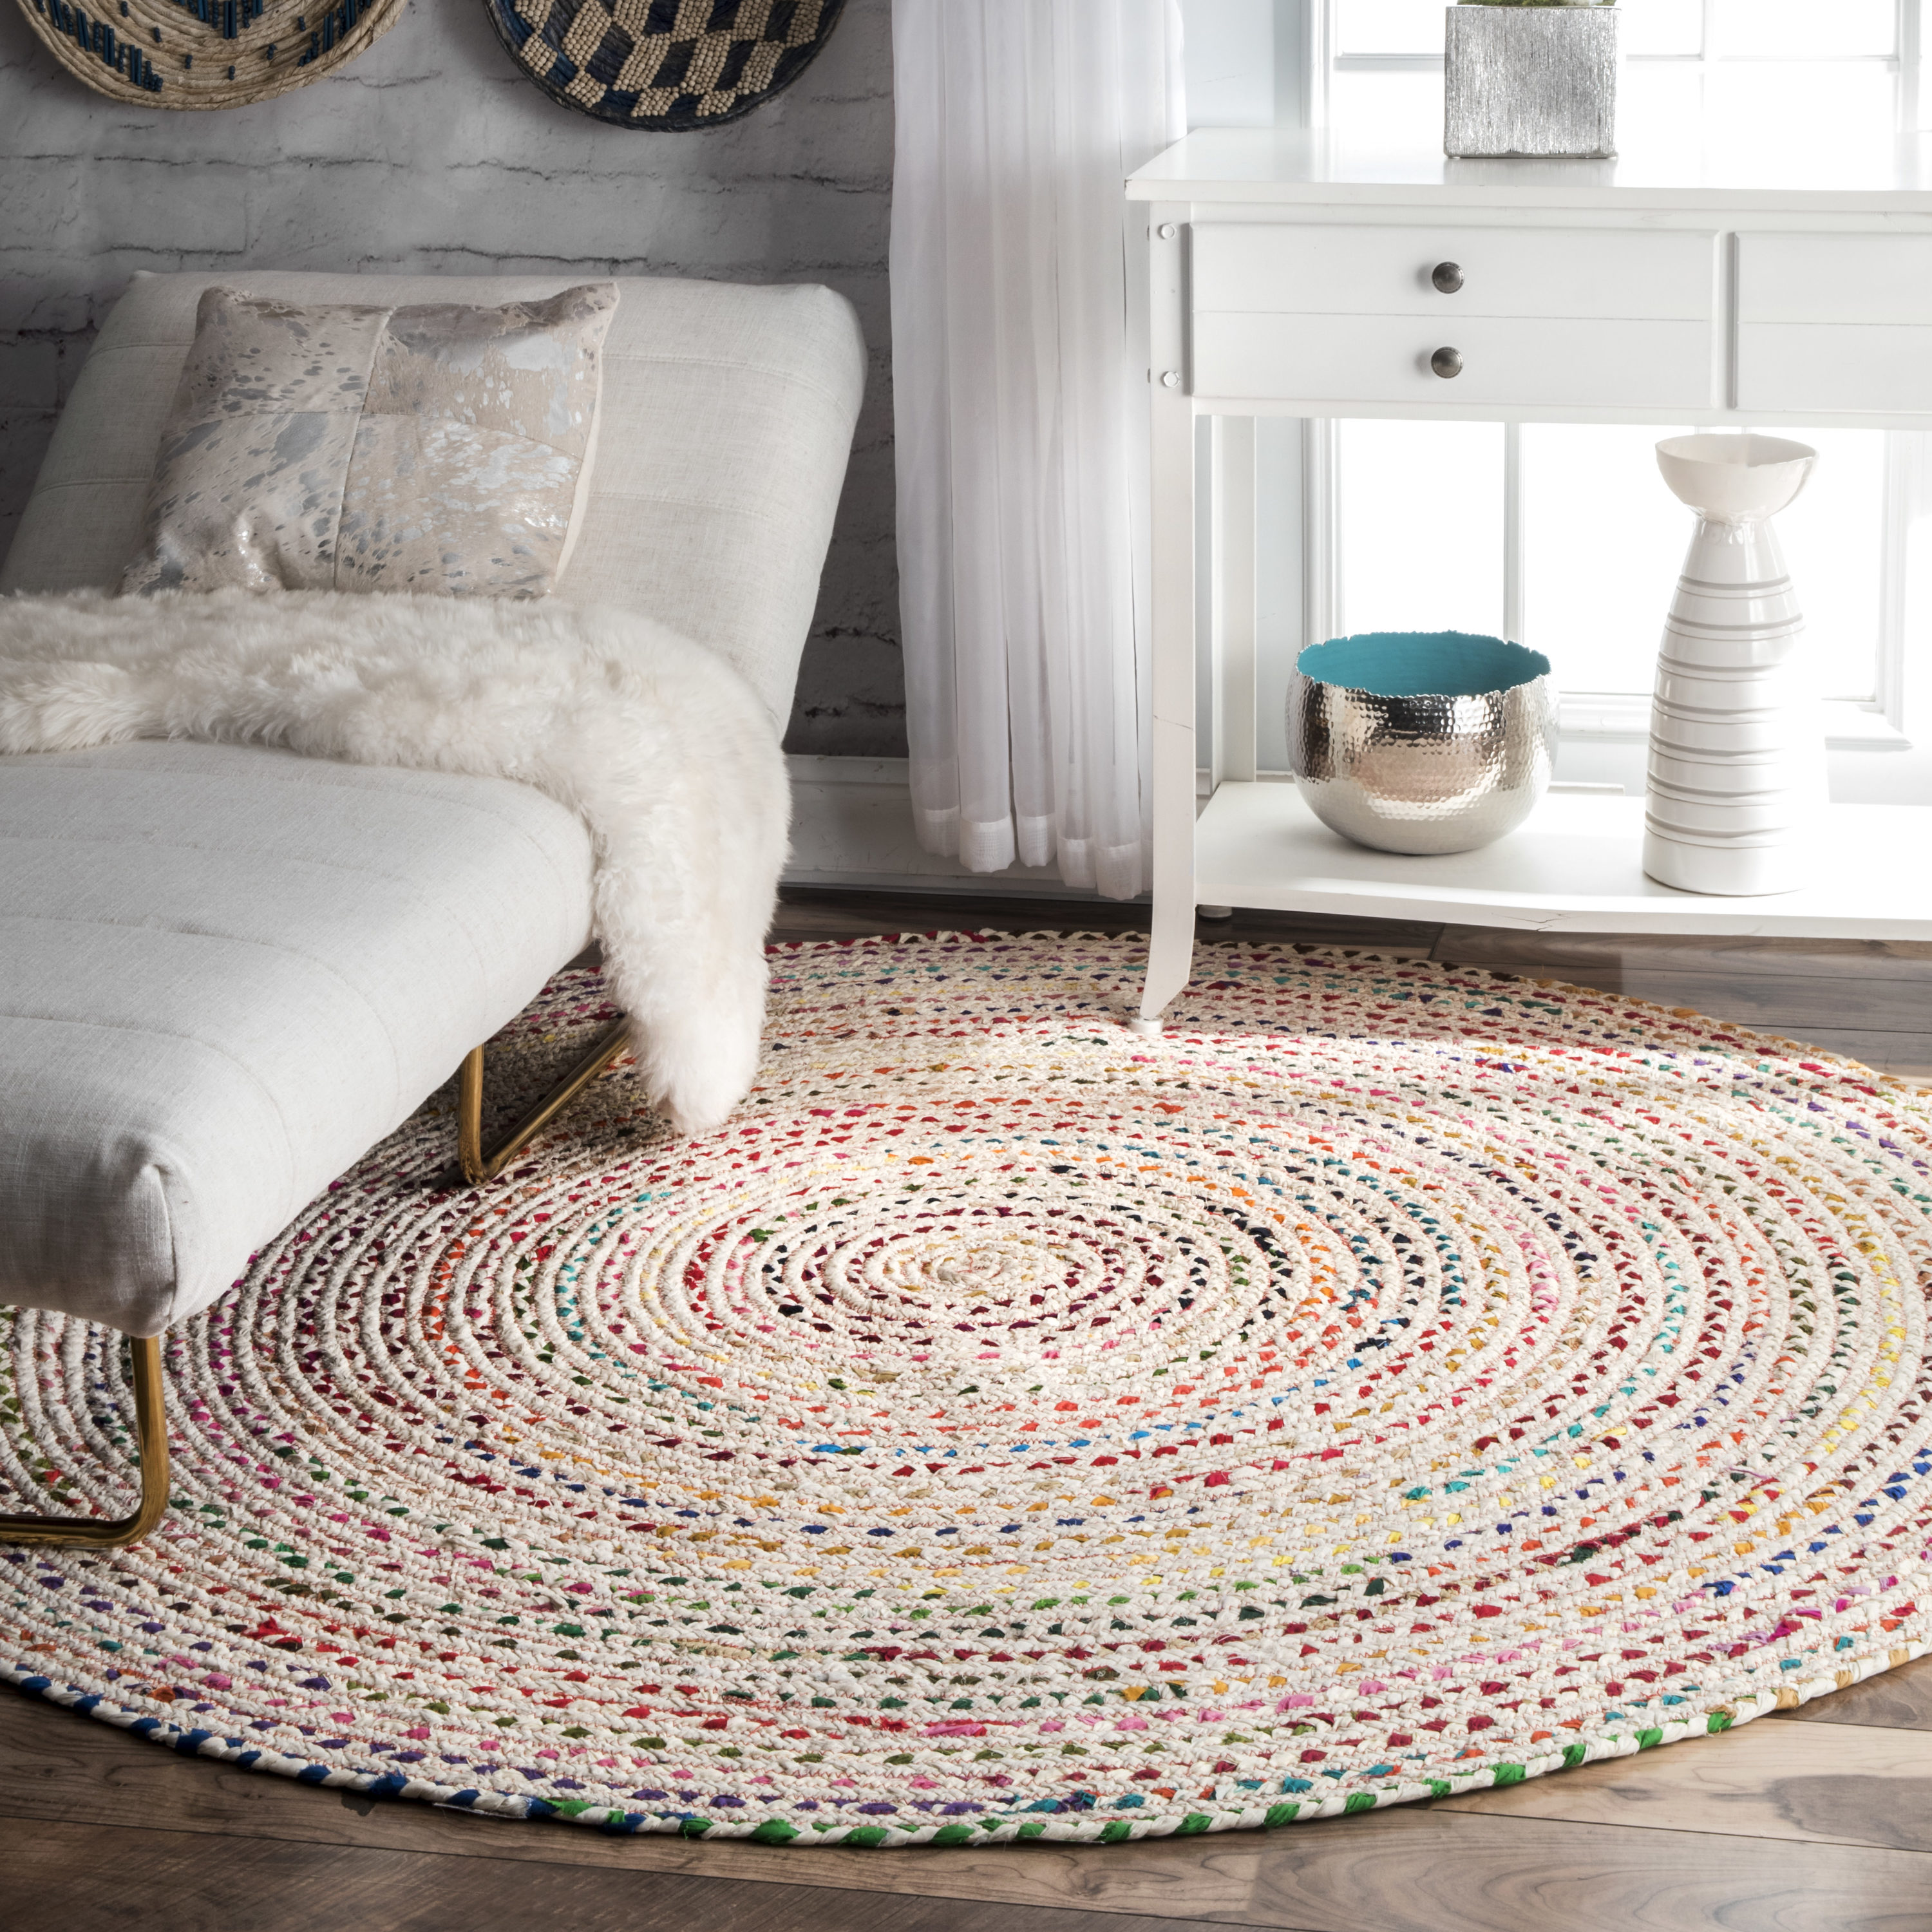  rag rug braided rag rug, shabby, boho,reclaimed/recycled  materials, ecofriendly home decor, bathroom mat, kitchen accent rug :  Handmade Products